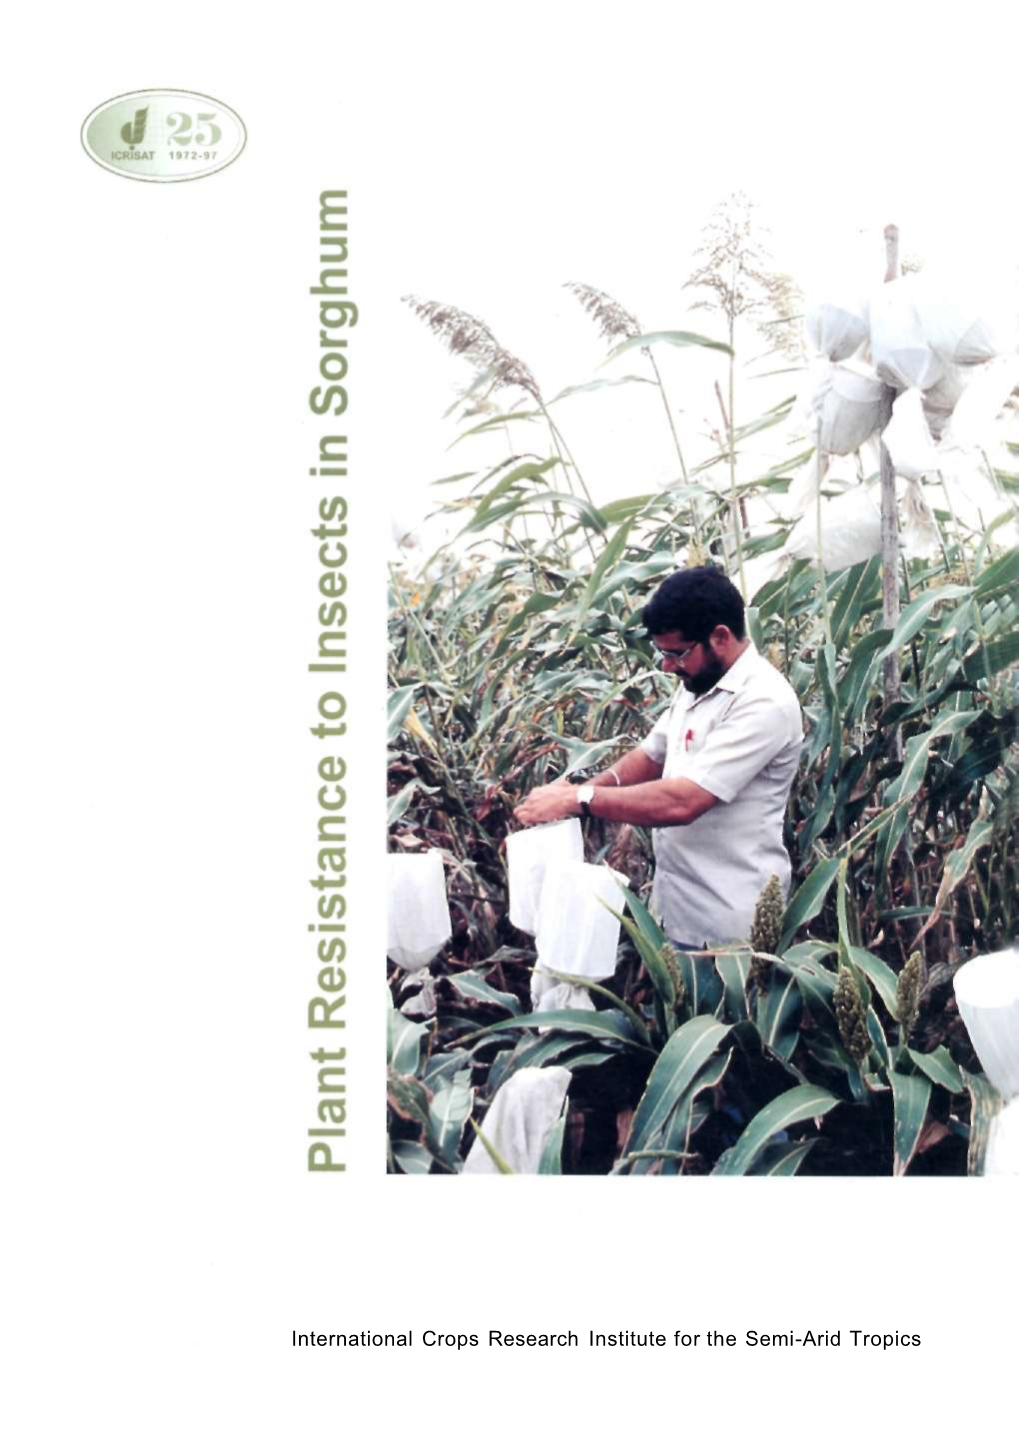 International Crops Research Institute for the Semi-Arid Tropics Citation: Sharma, H.C., Faujdar Singh, and Nwanze, K.F